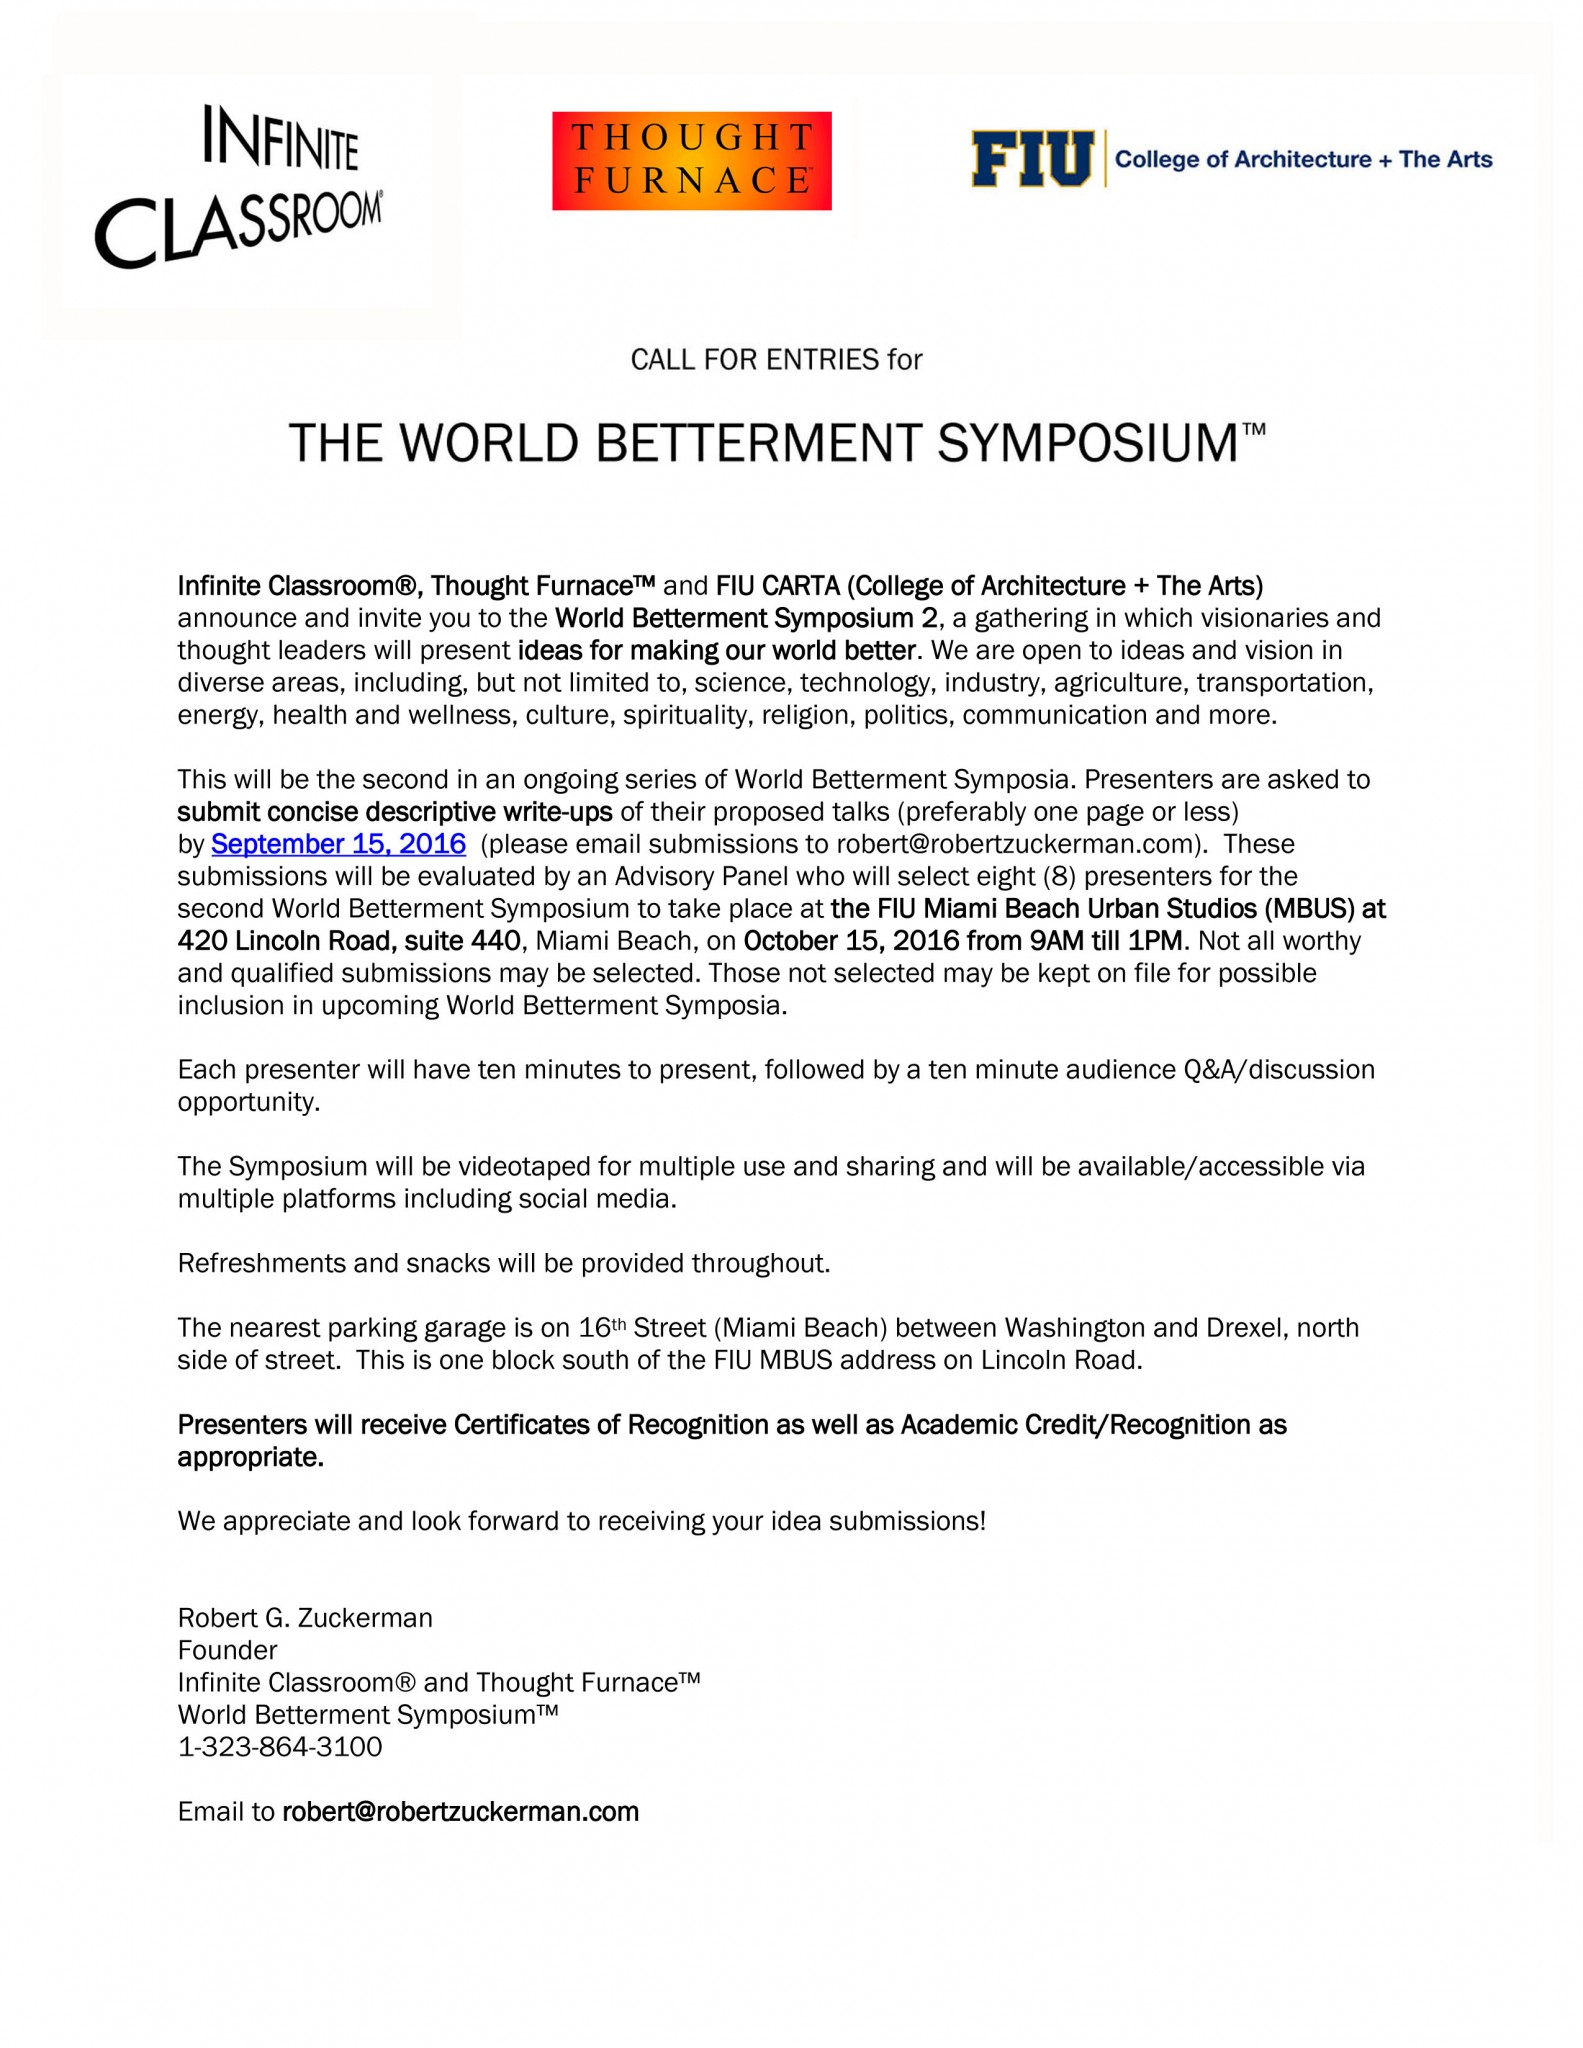 World Betterment Symposium oct 2016